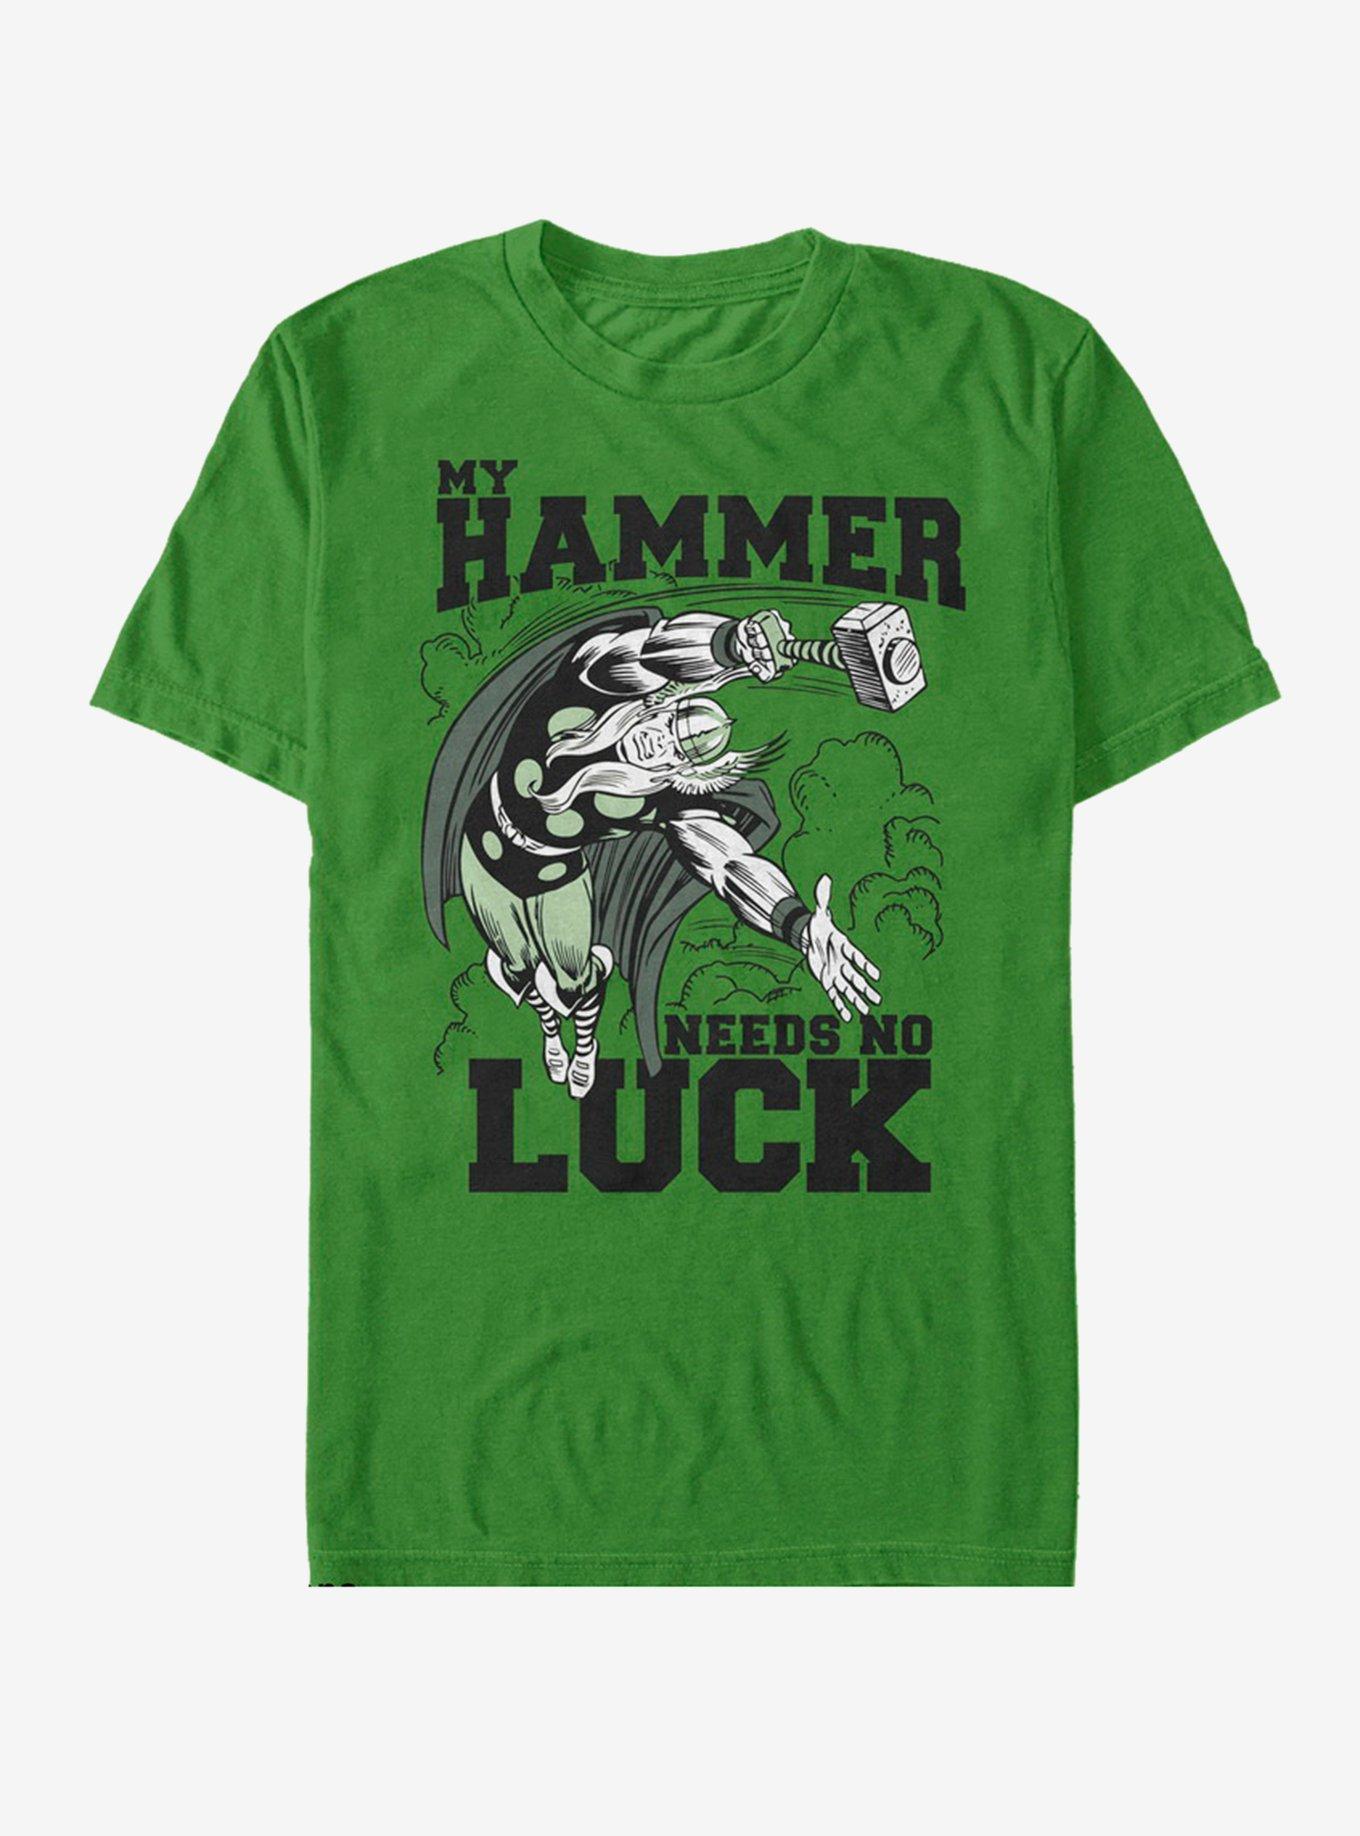 Marvel Thor Hammer Luck T-Shirt, KELLY, hi-res